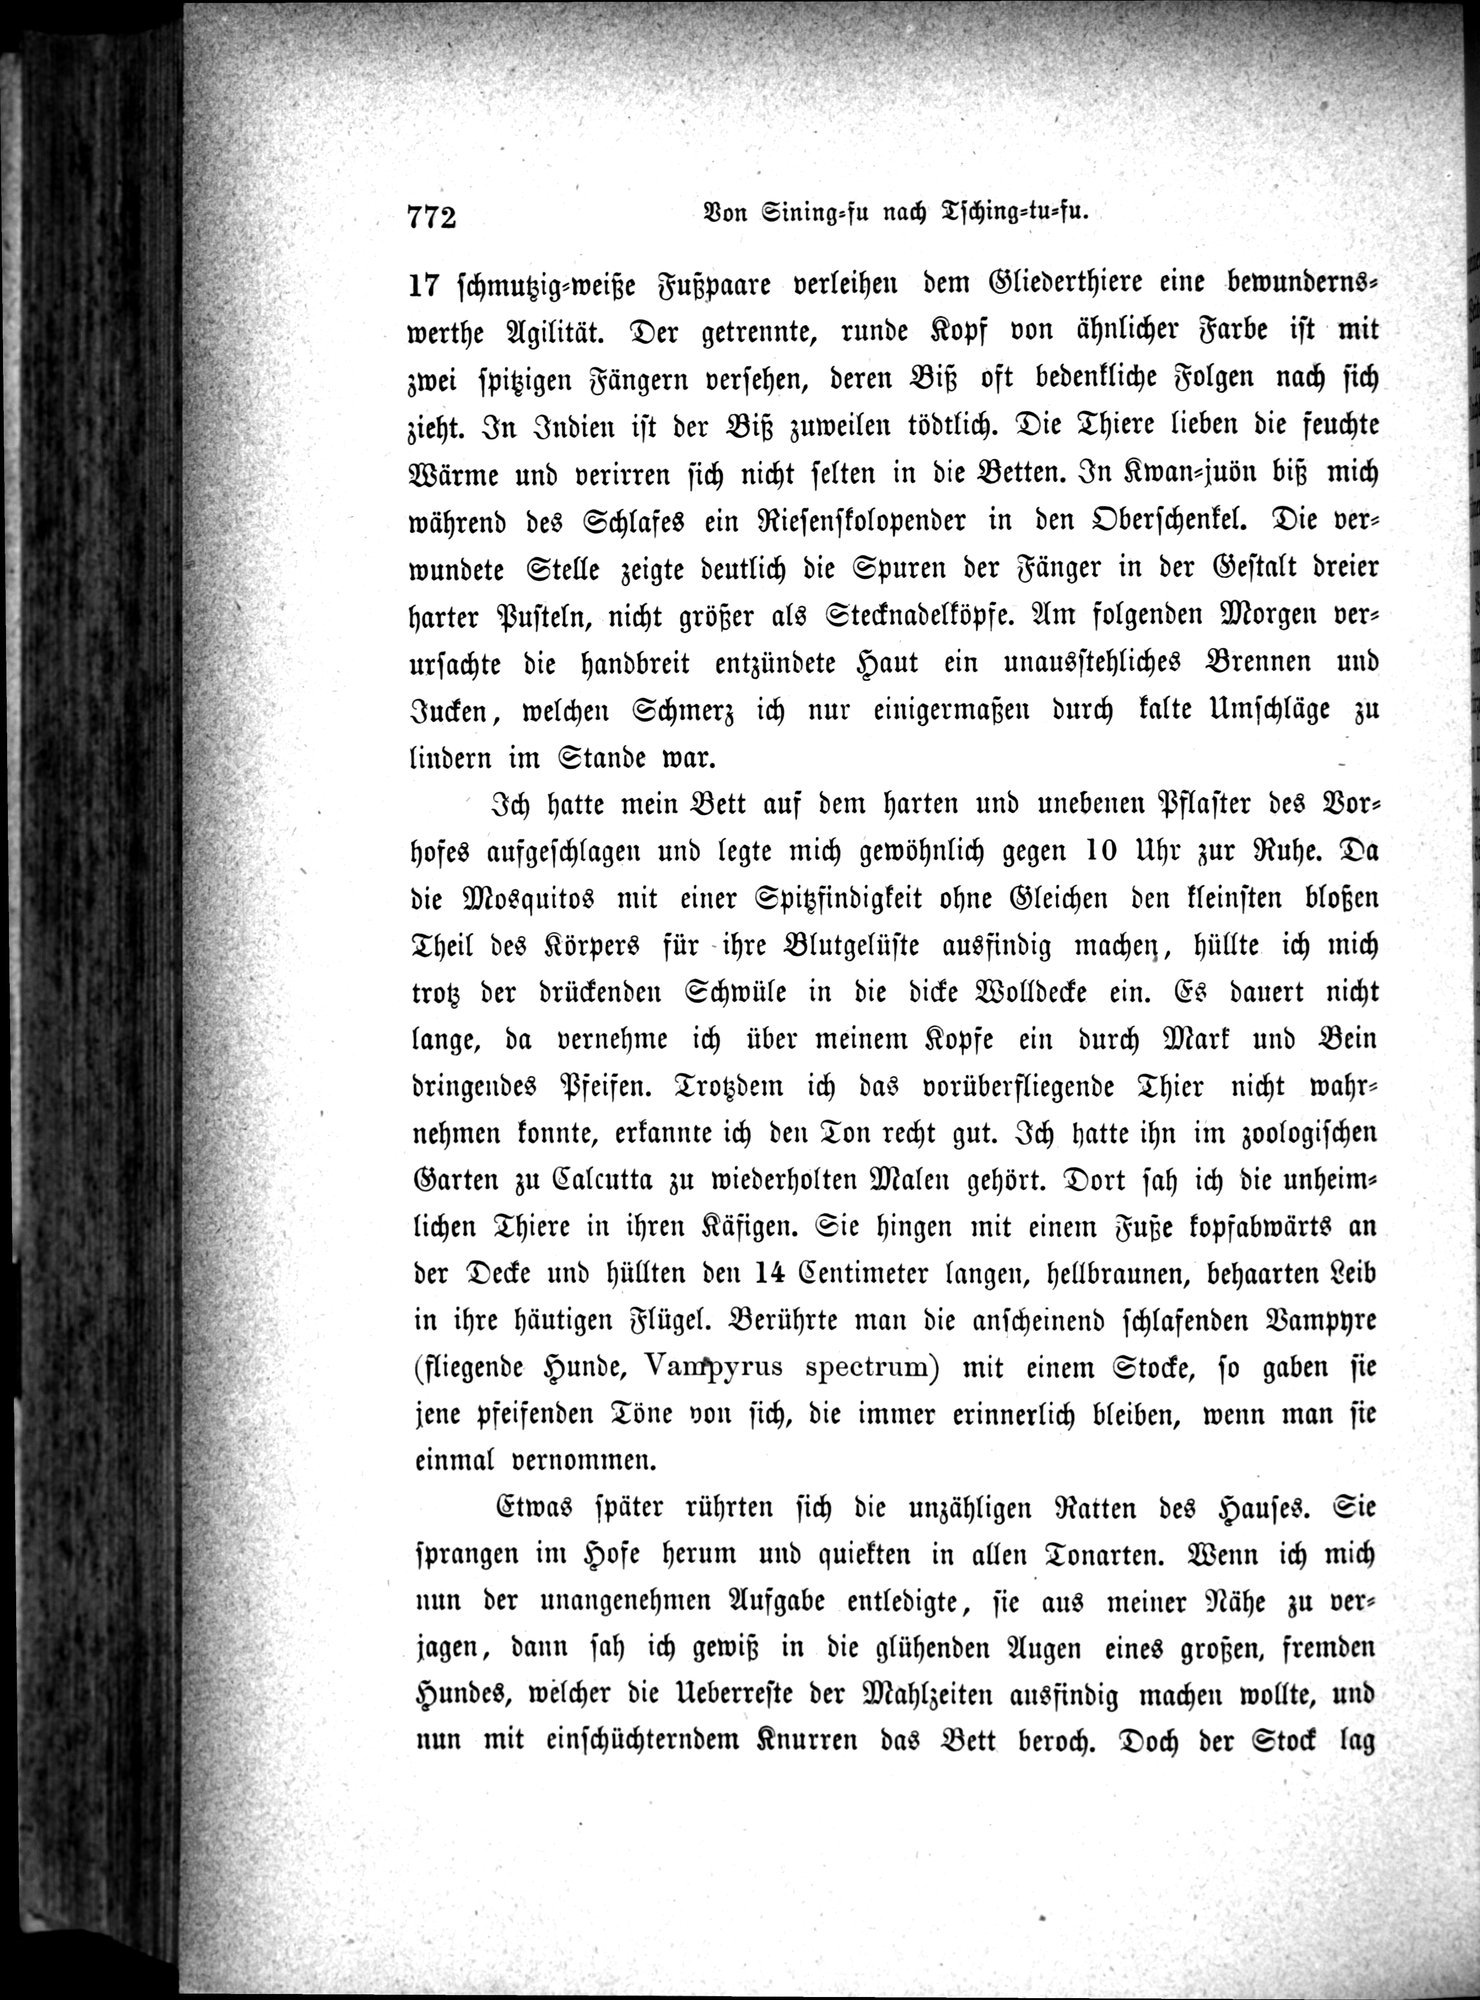 Im fernen Osten : vol.1 / Page 796 (Grayscale High Resolution Image)